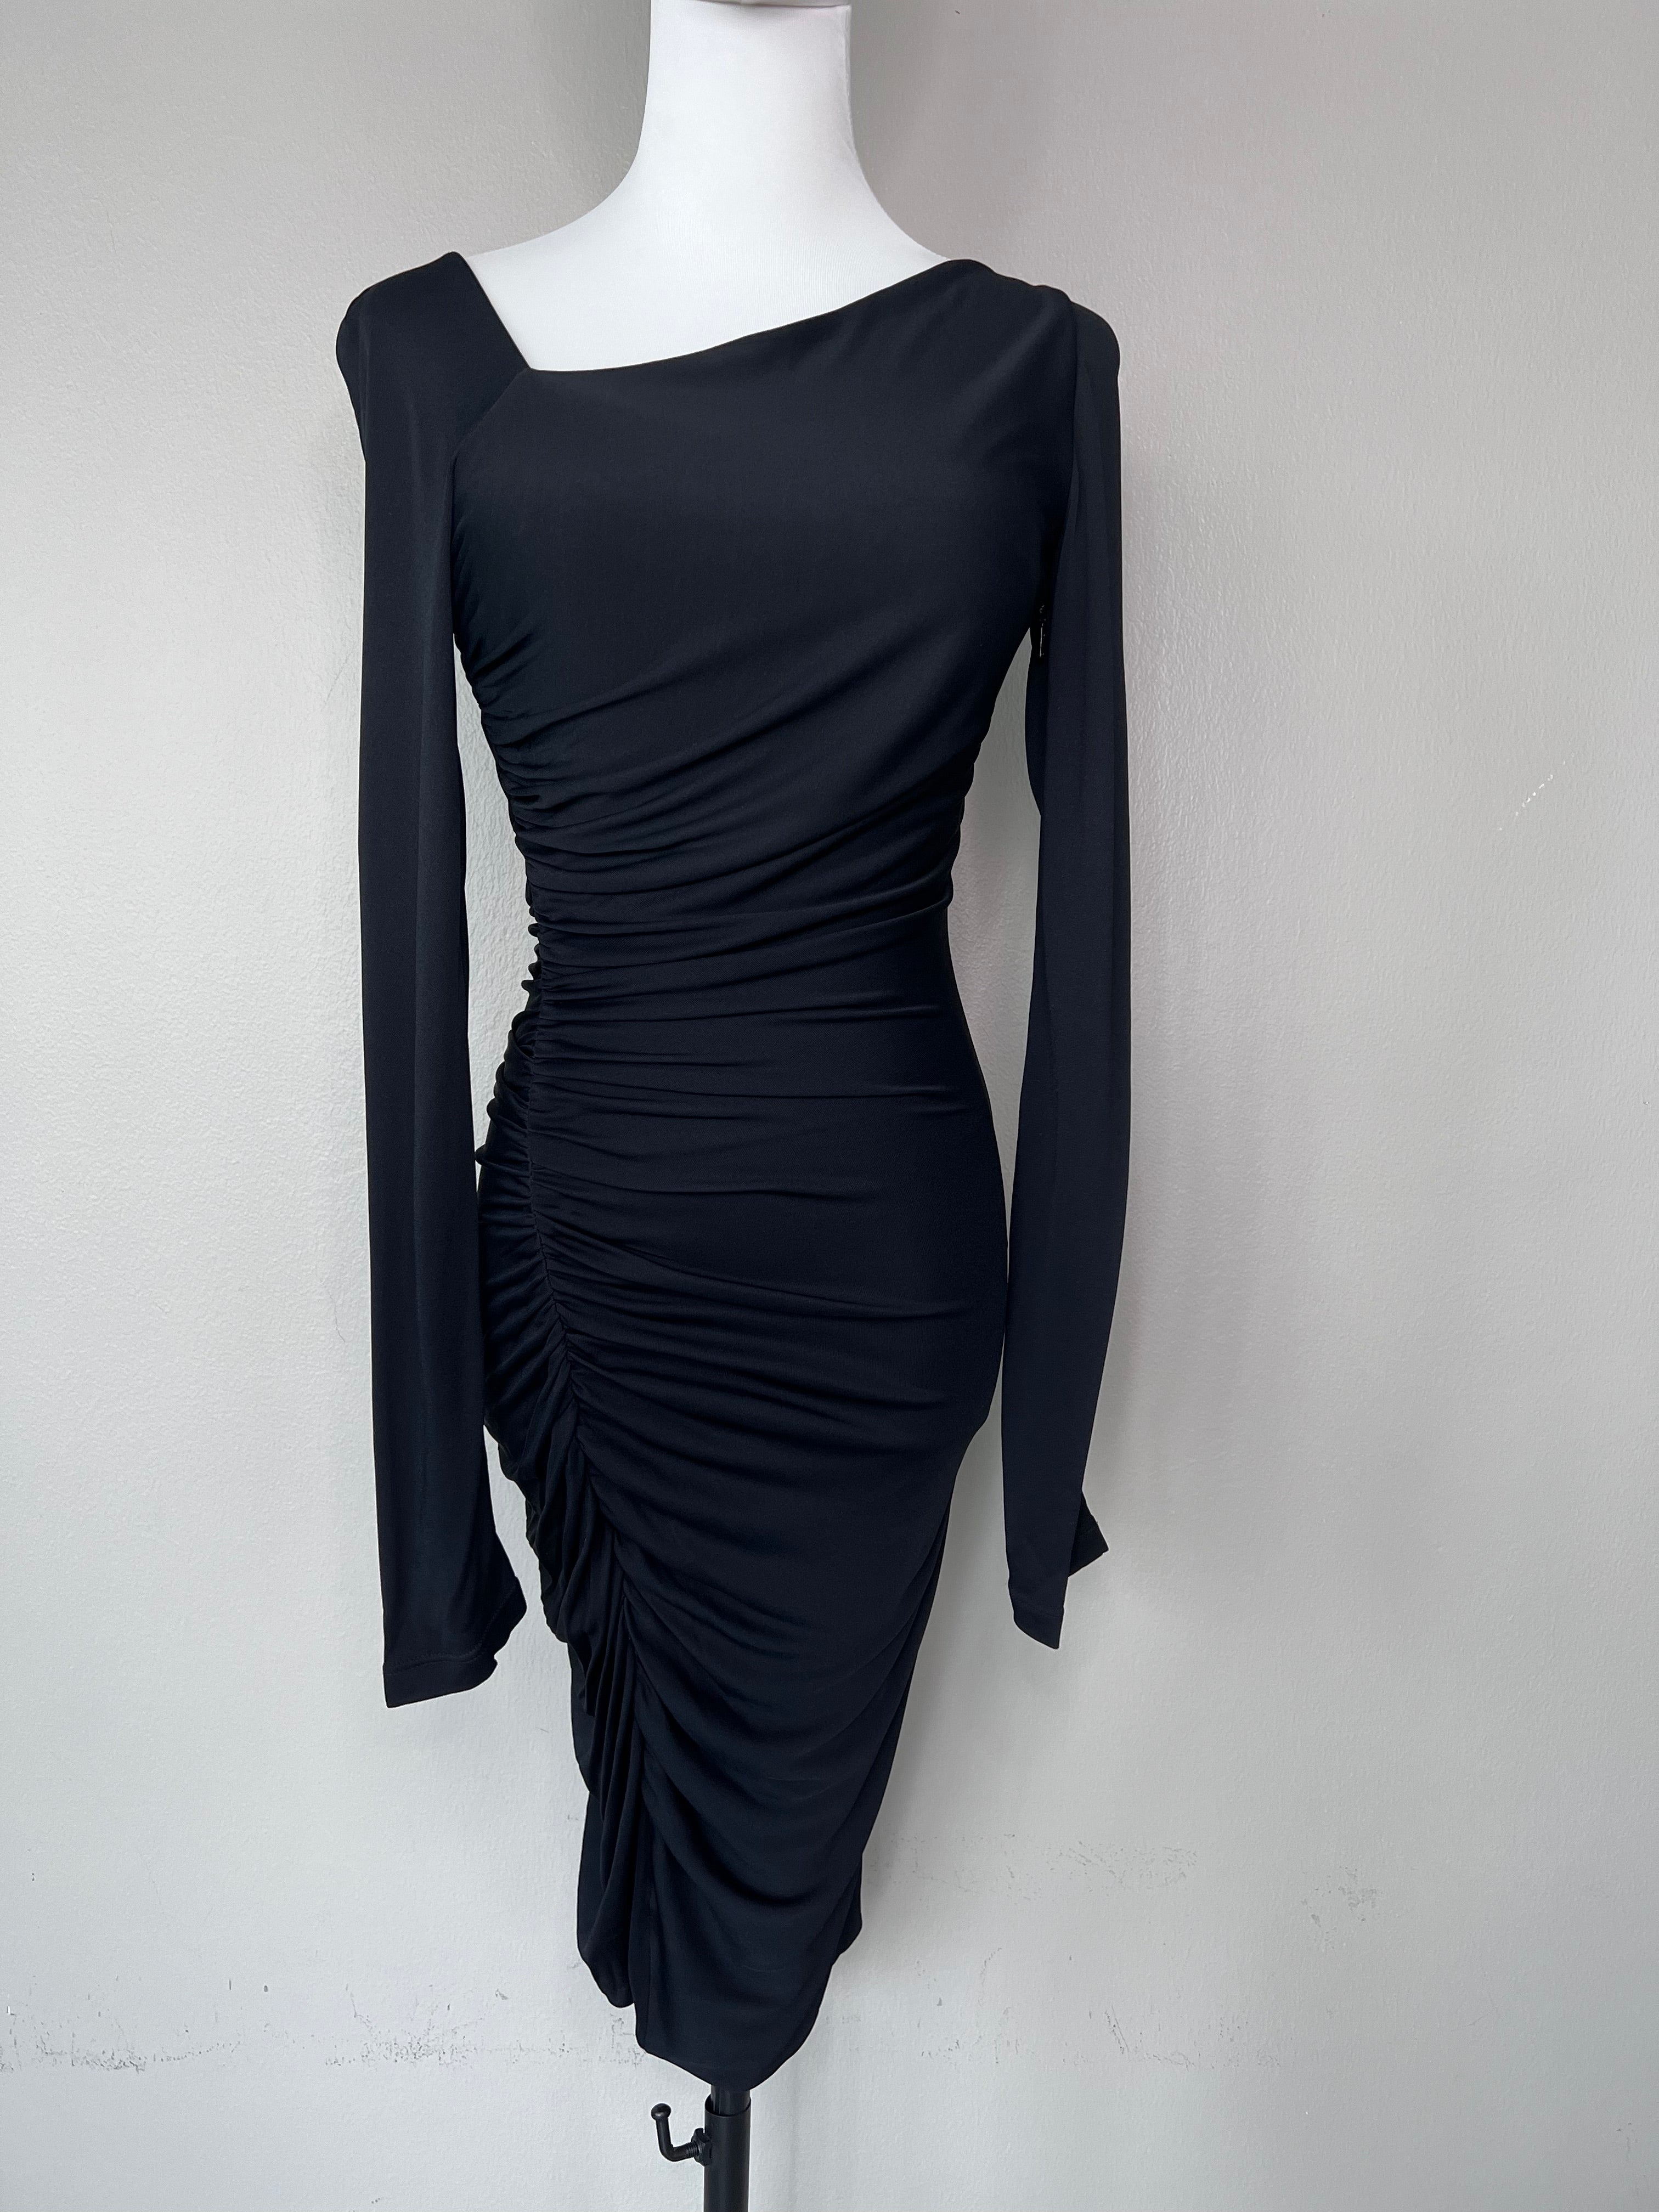 Versace black dress that wraps you body - VERSACE